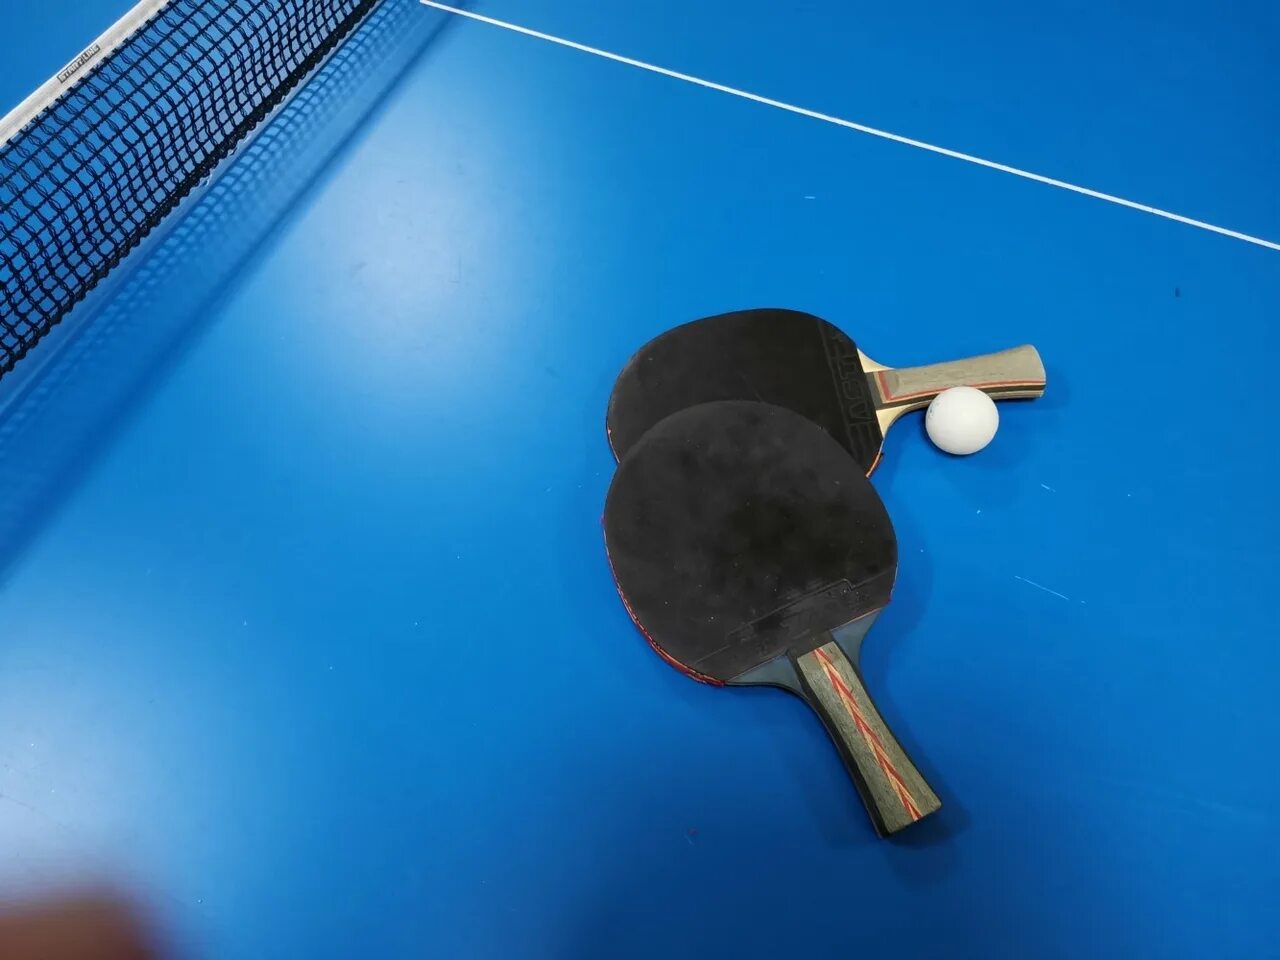 Тайфун по настольному теннису. Настольный теннис Феникс. Пинг-понг. Настольный теннис анонс. Покажи настольный теннис